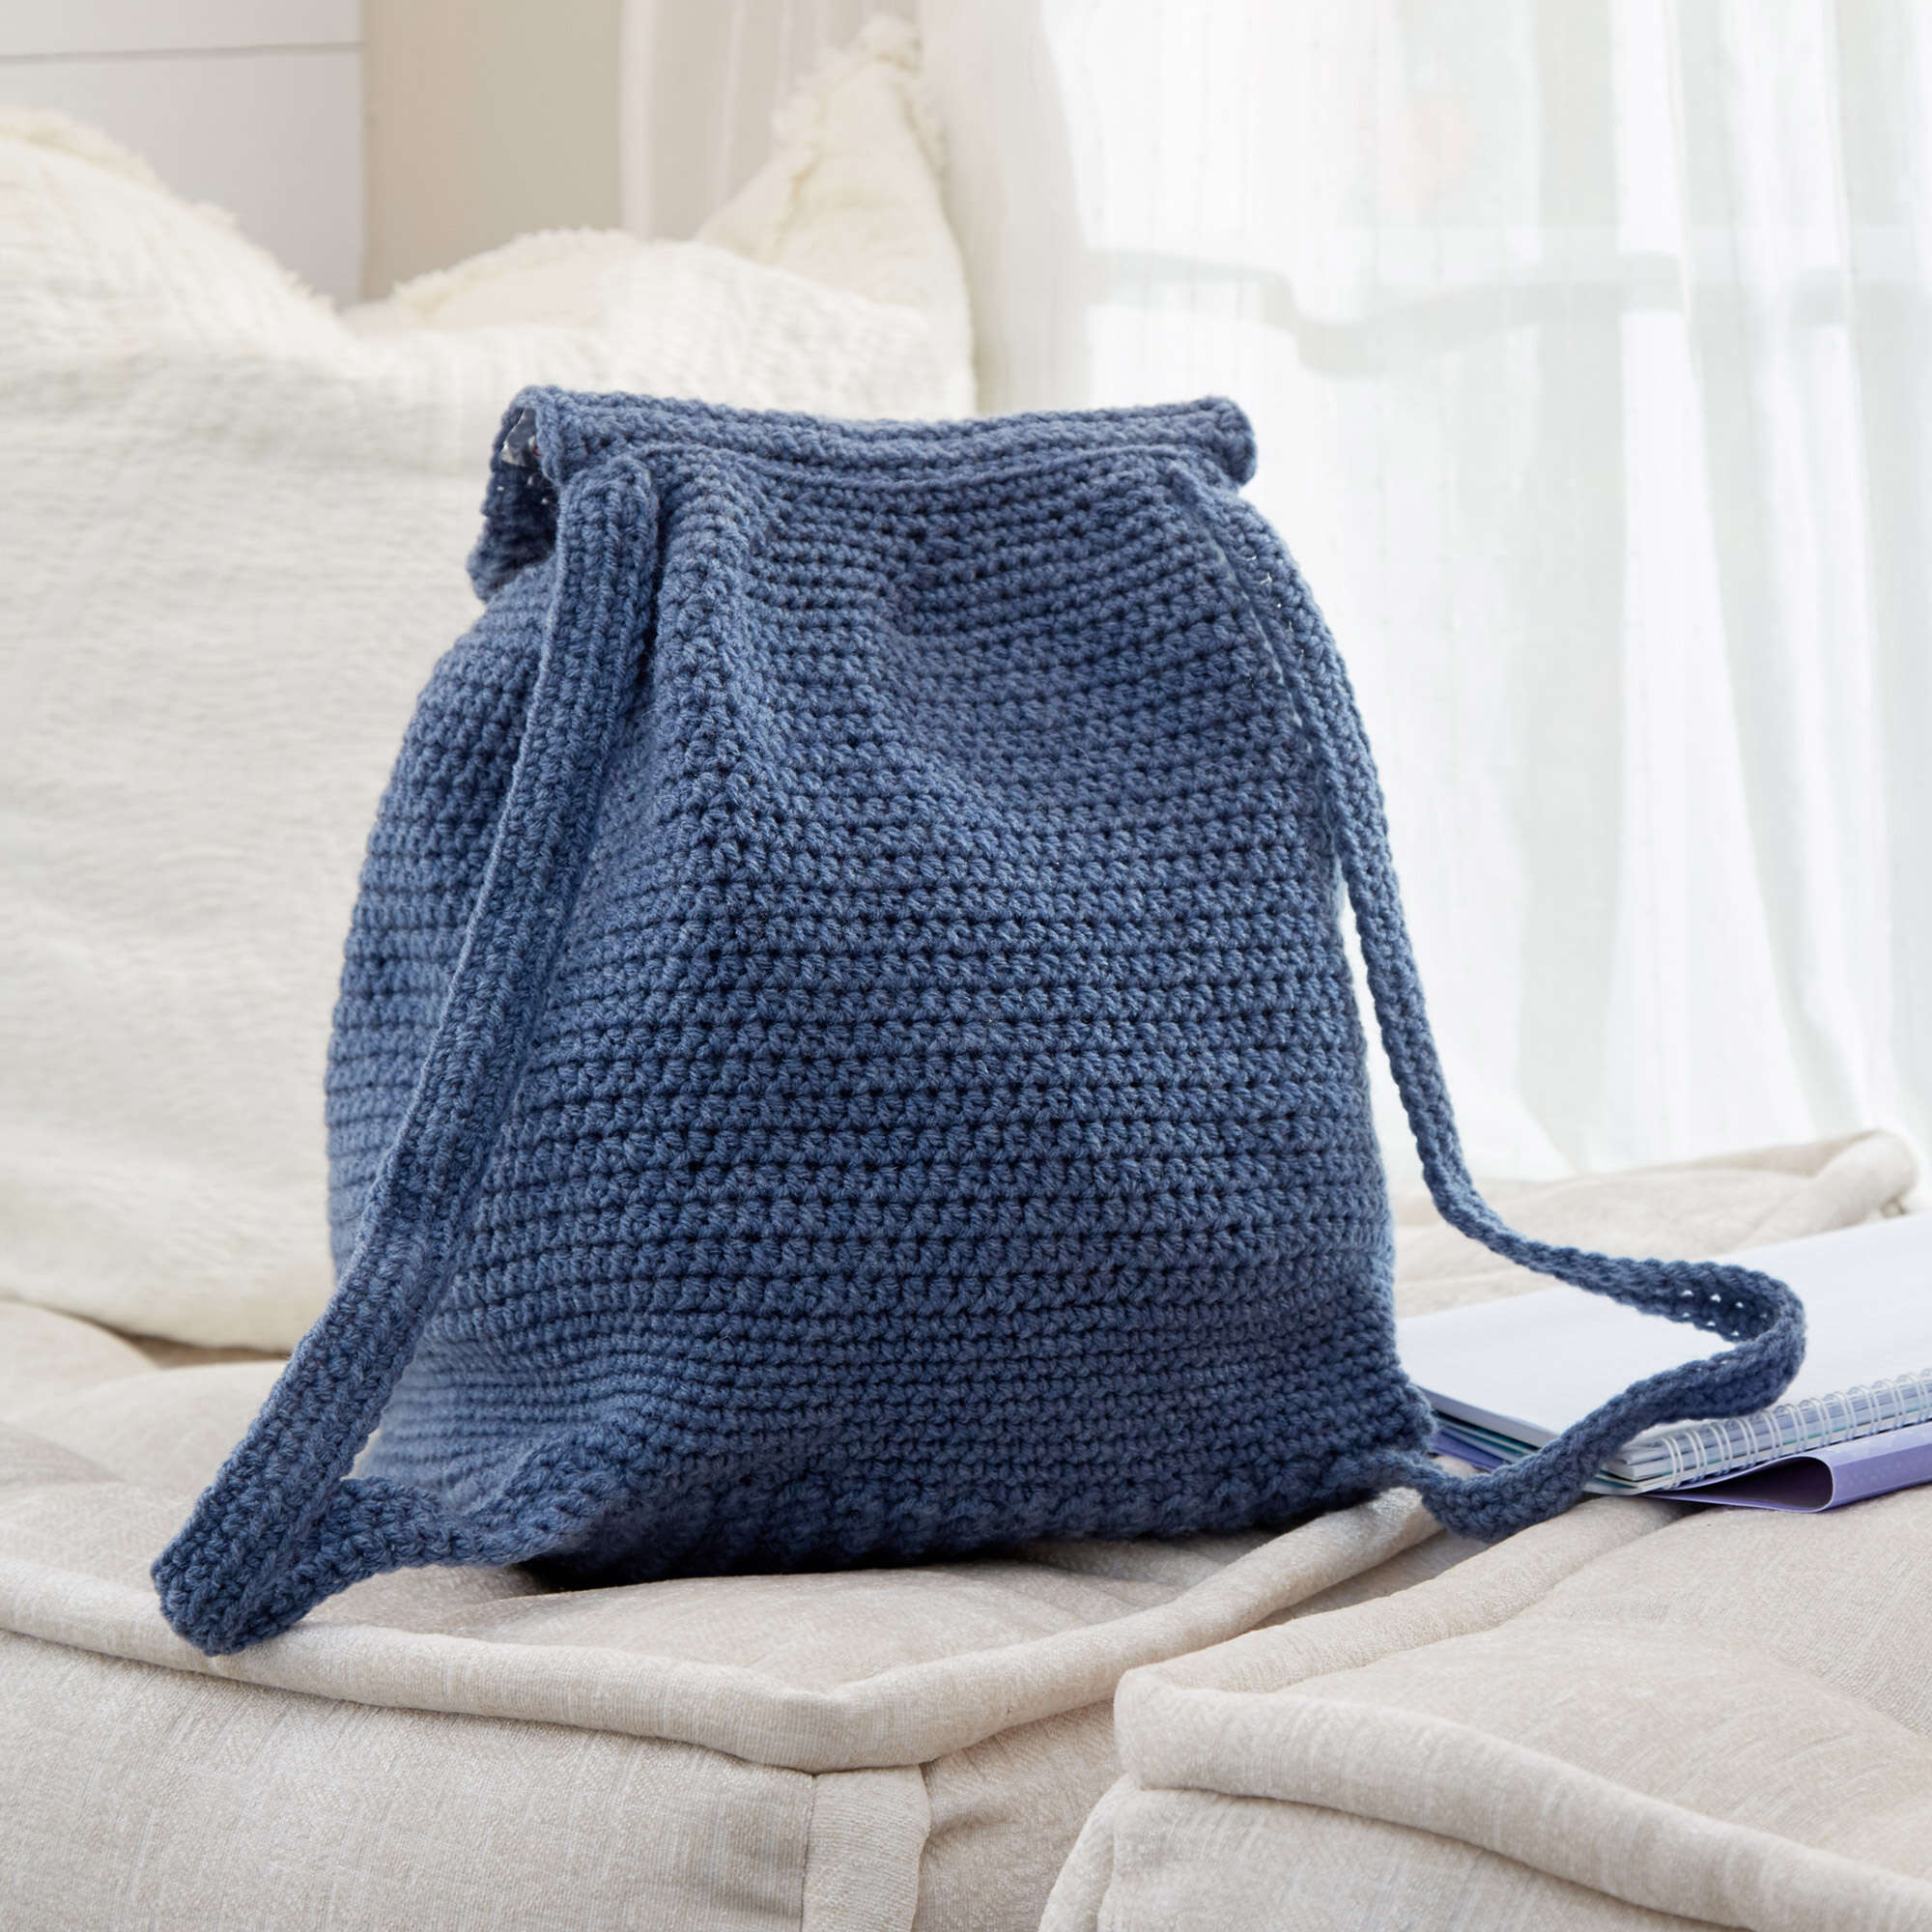 Crochet Backpack Patterns